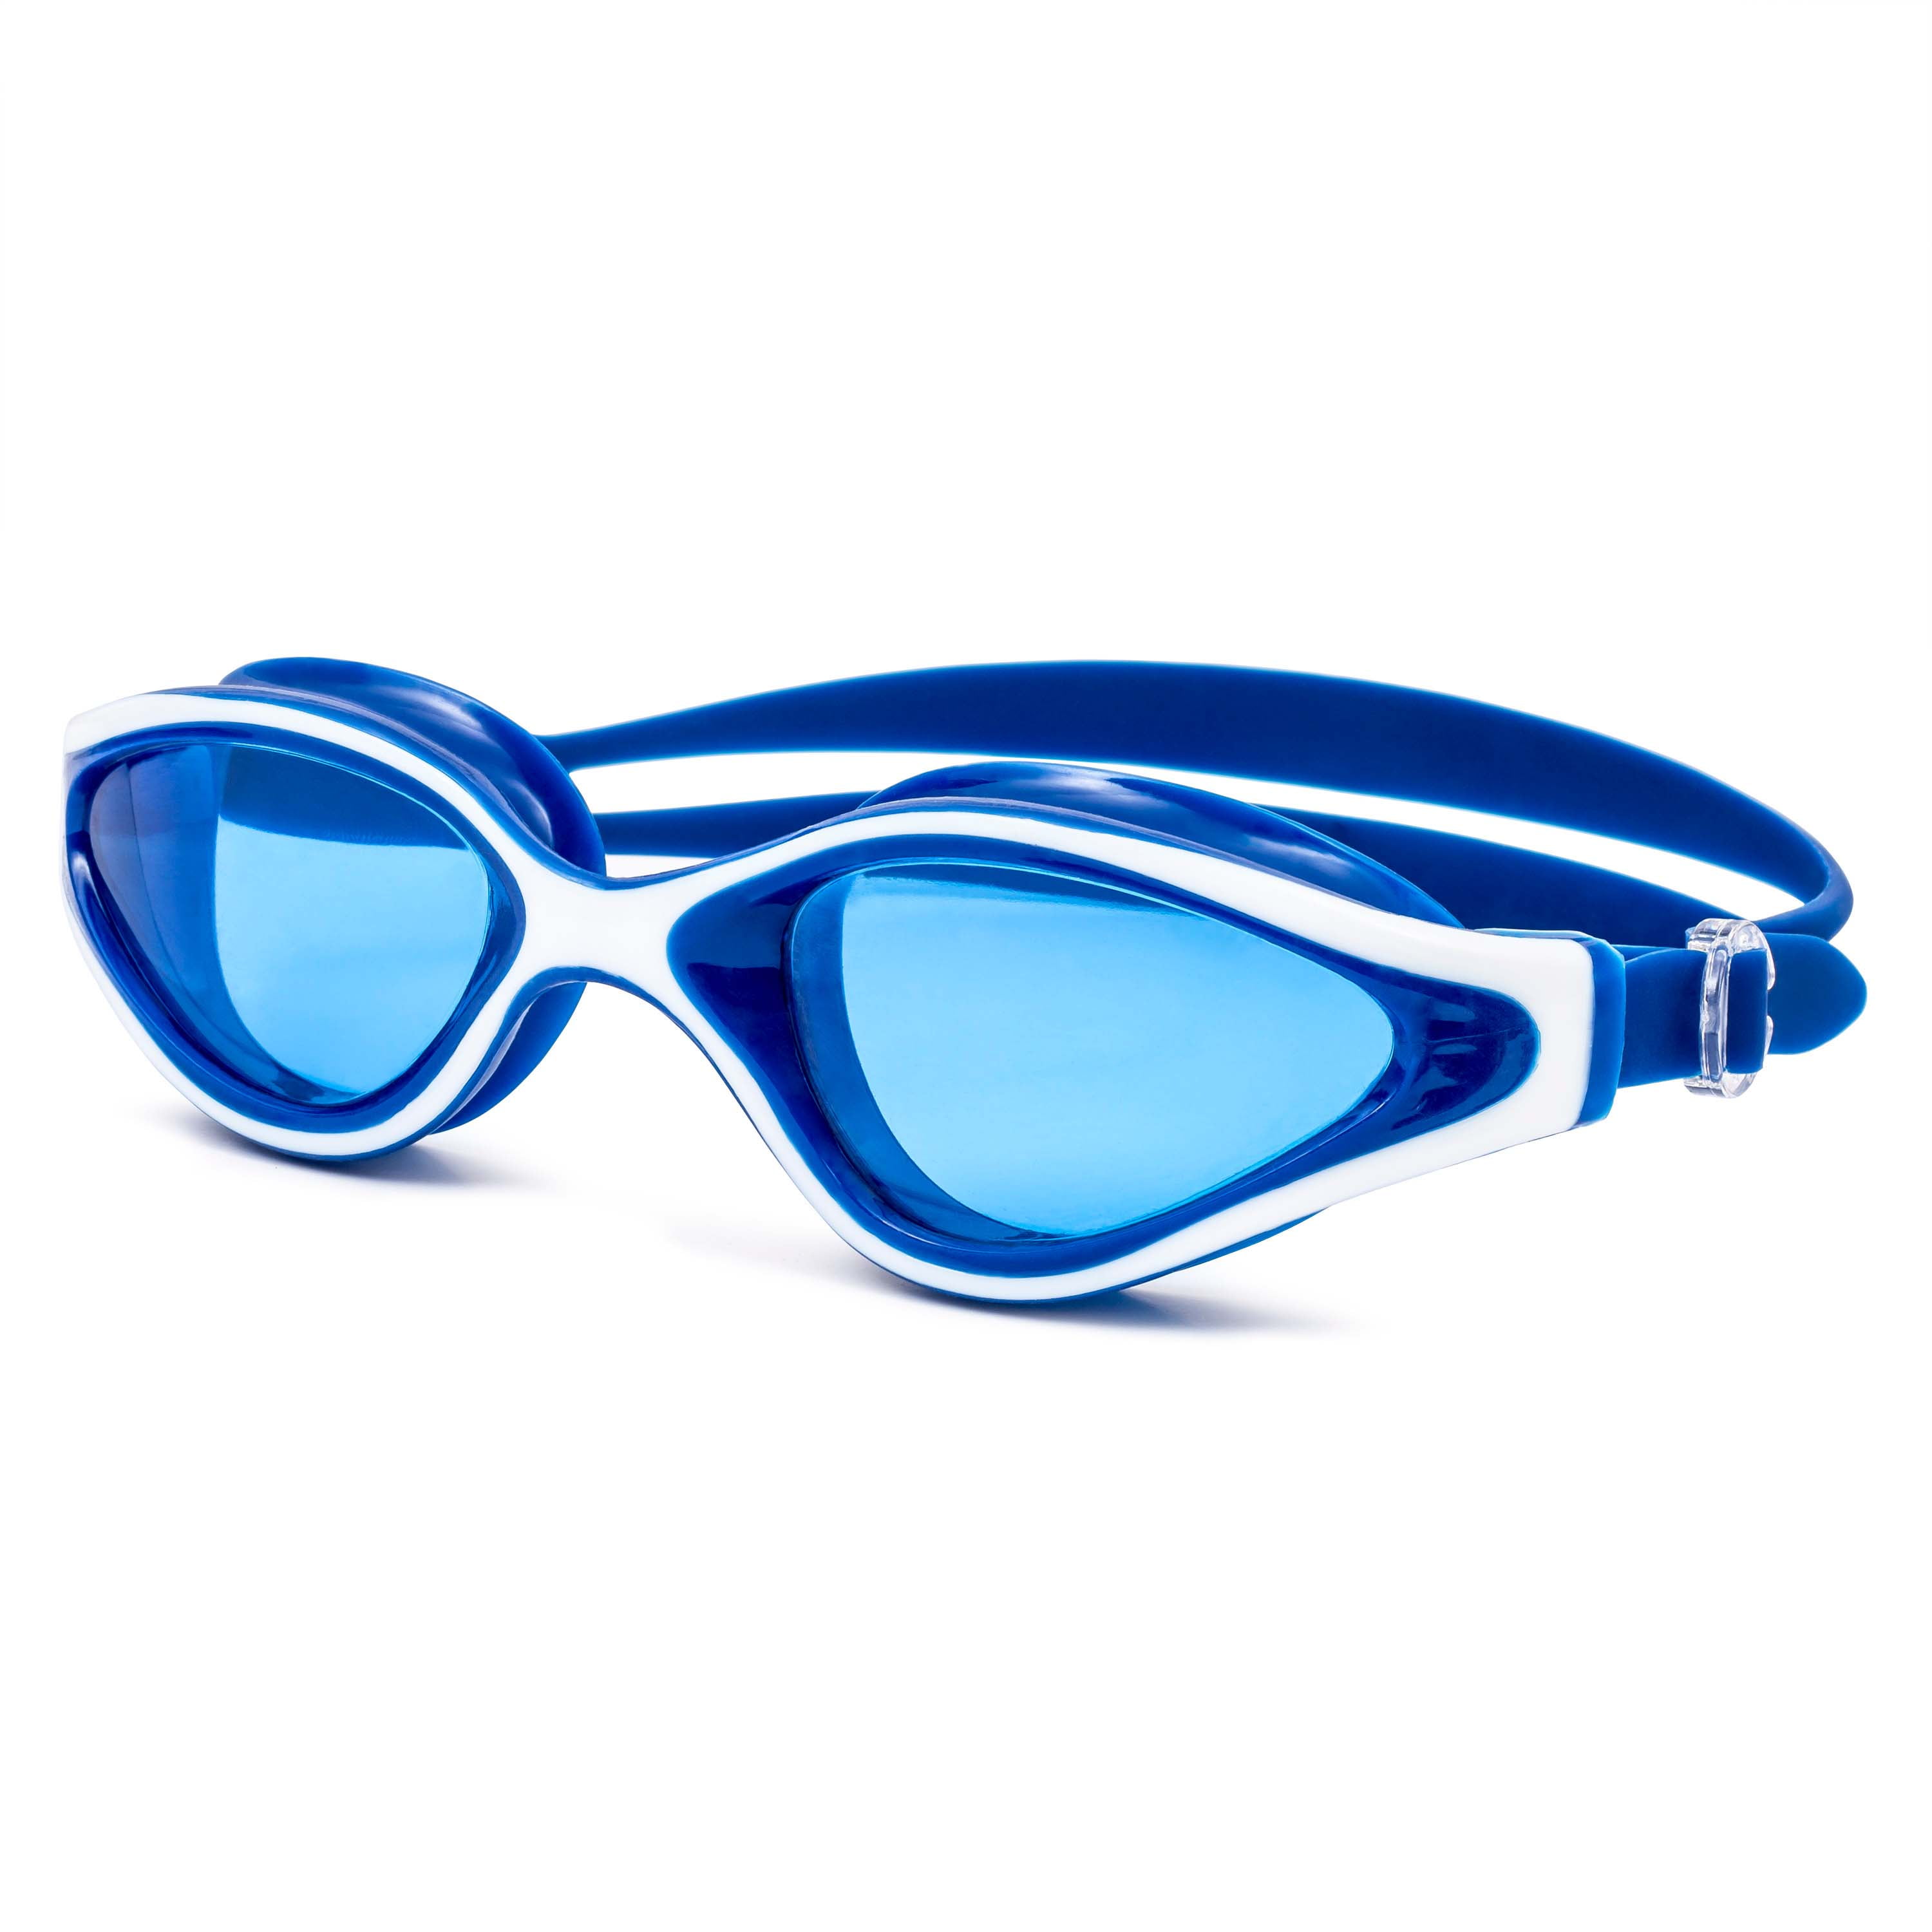 Dolfino and Swimming White Performa Goggles Blue Sport